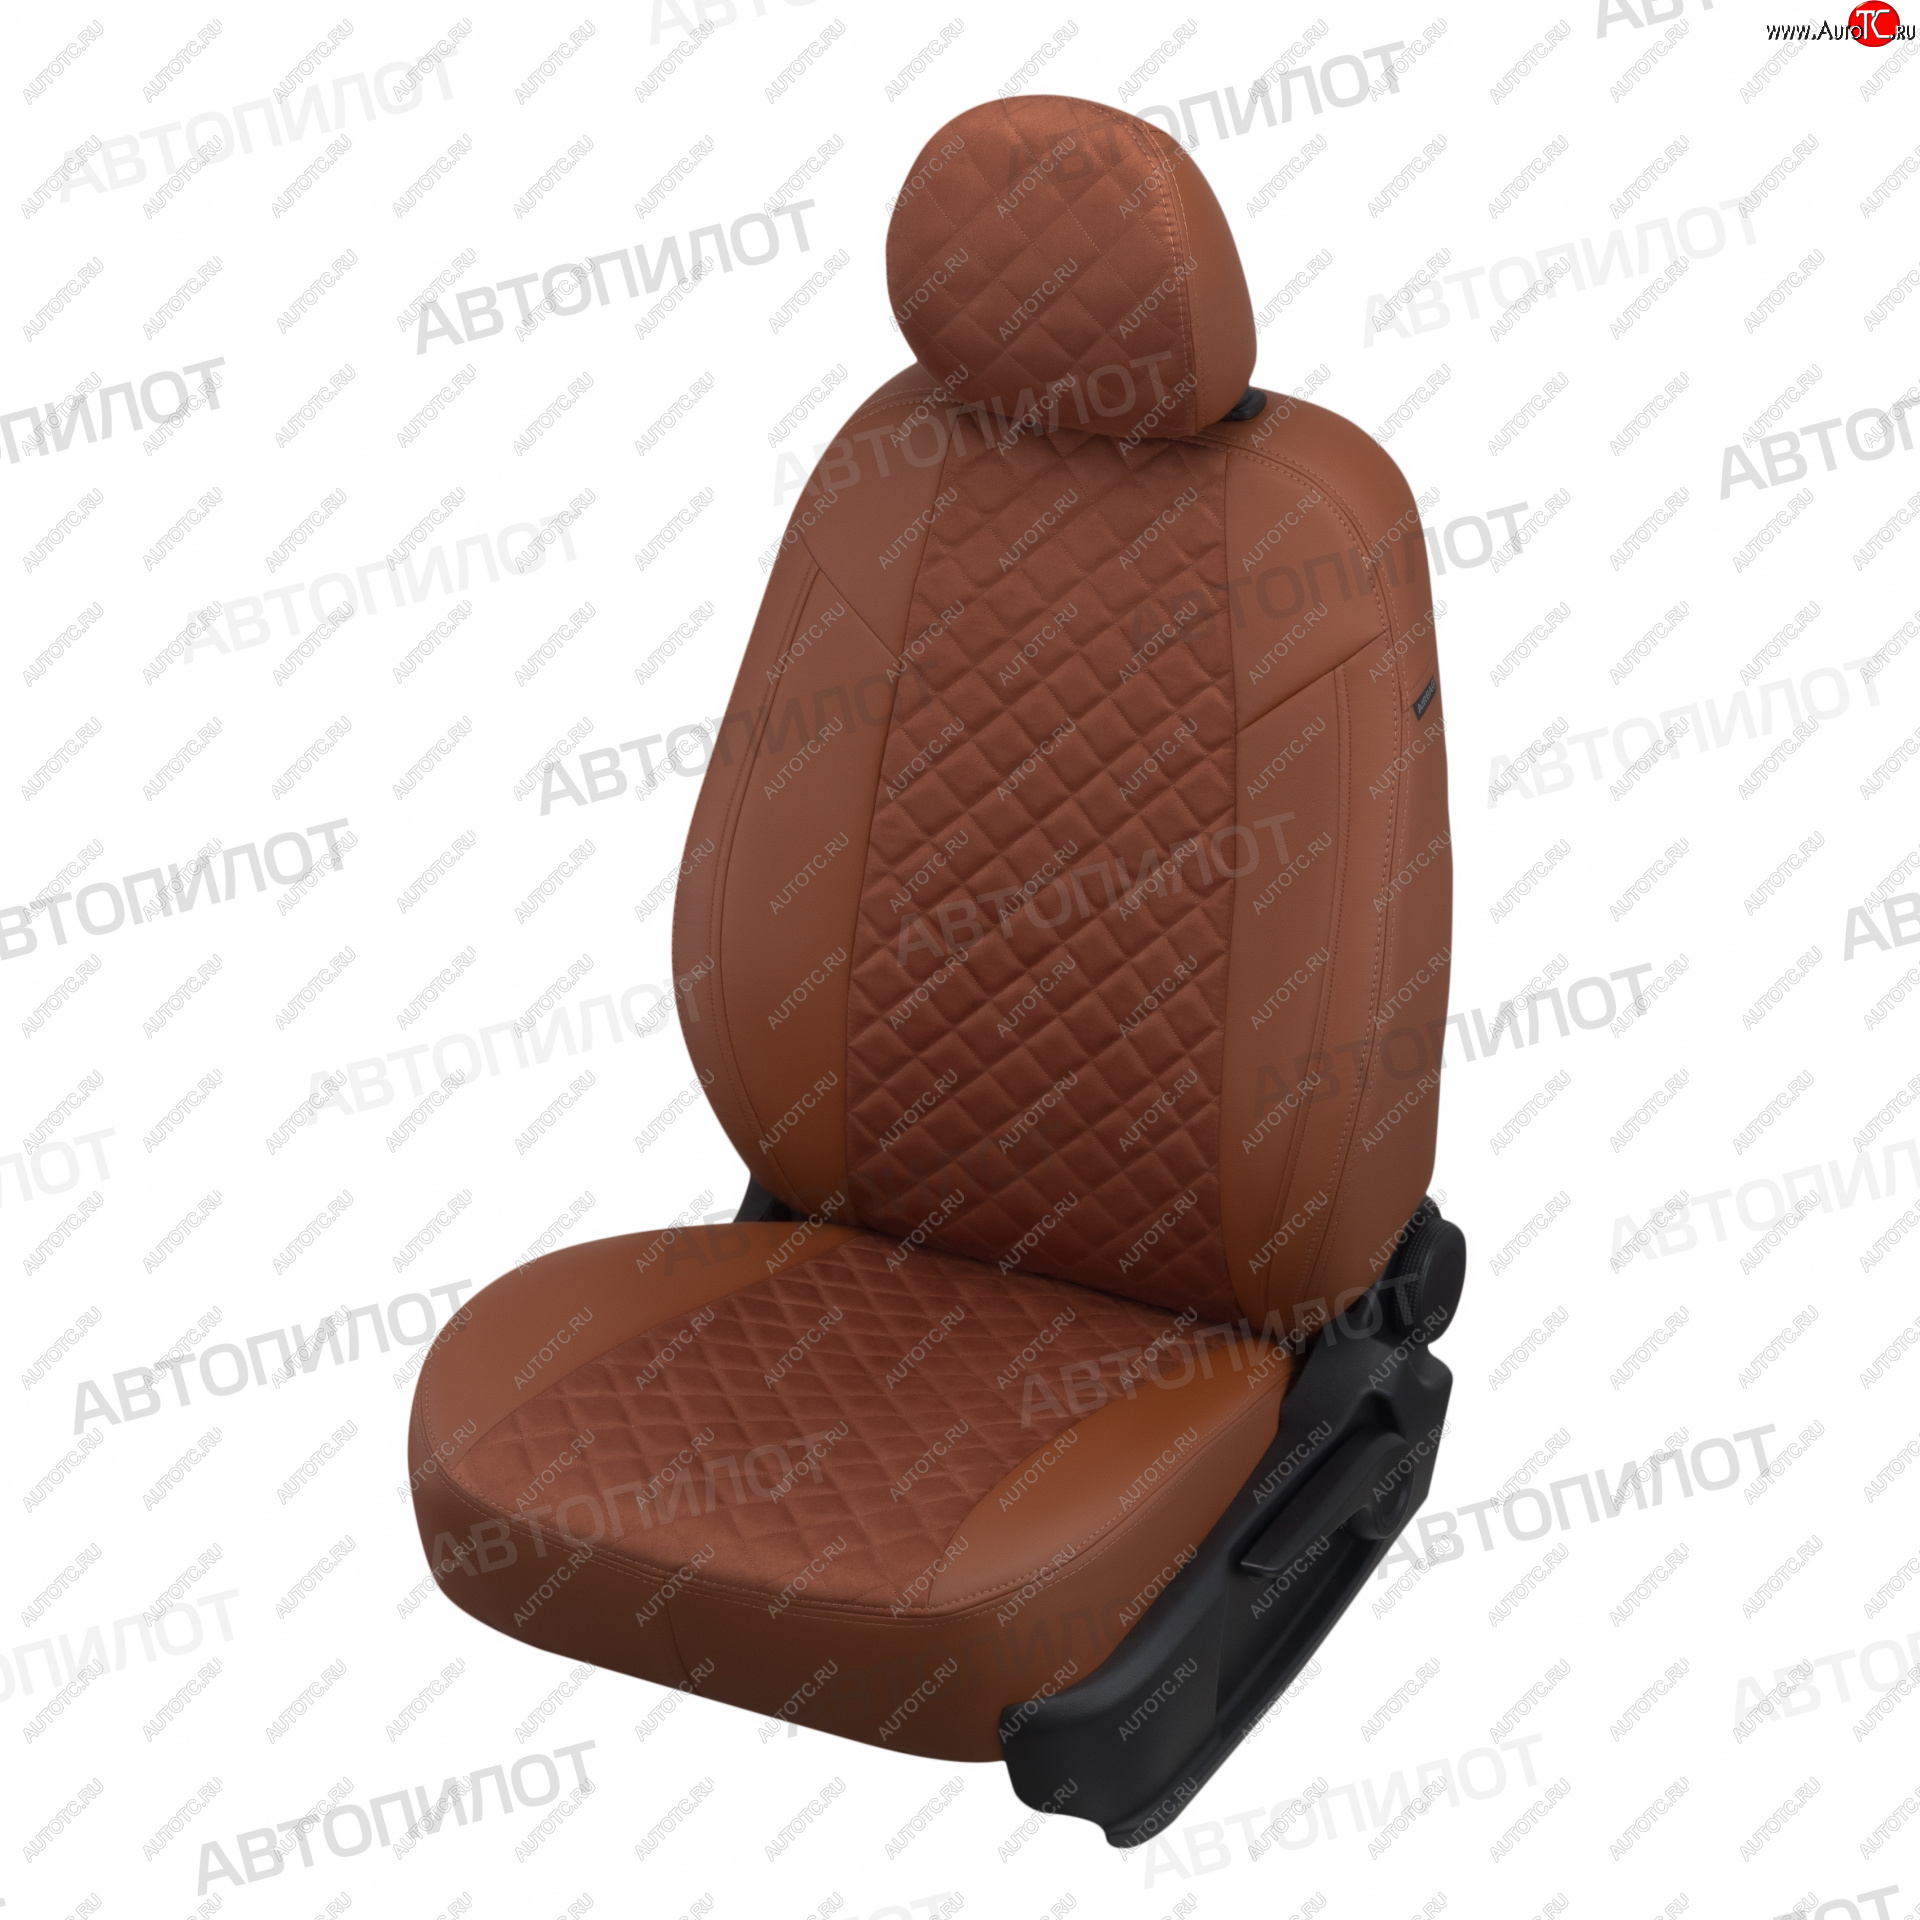 13 999 р. Чехлы сидений (экокожа/алькантара) Автопилот Ромб  BMW X3  E83 (2003-2009) (коричневый)